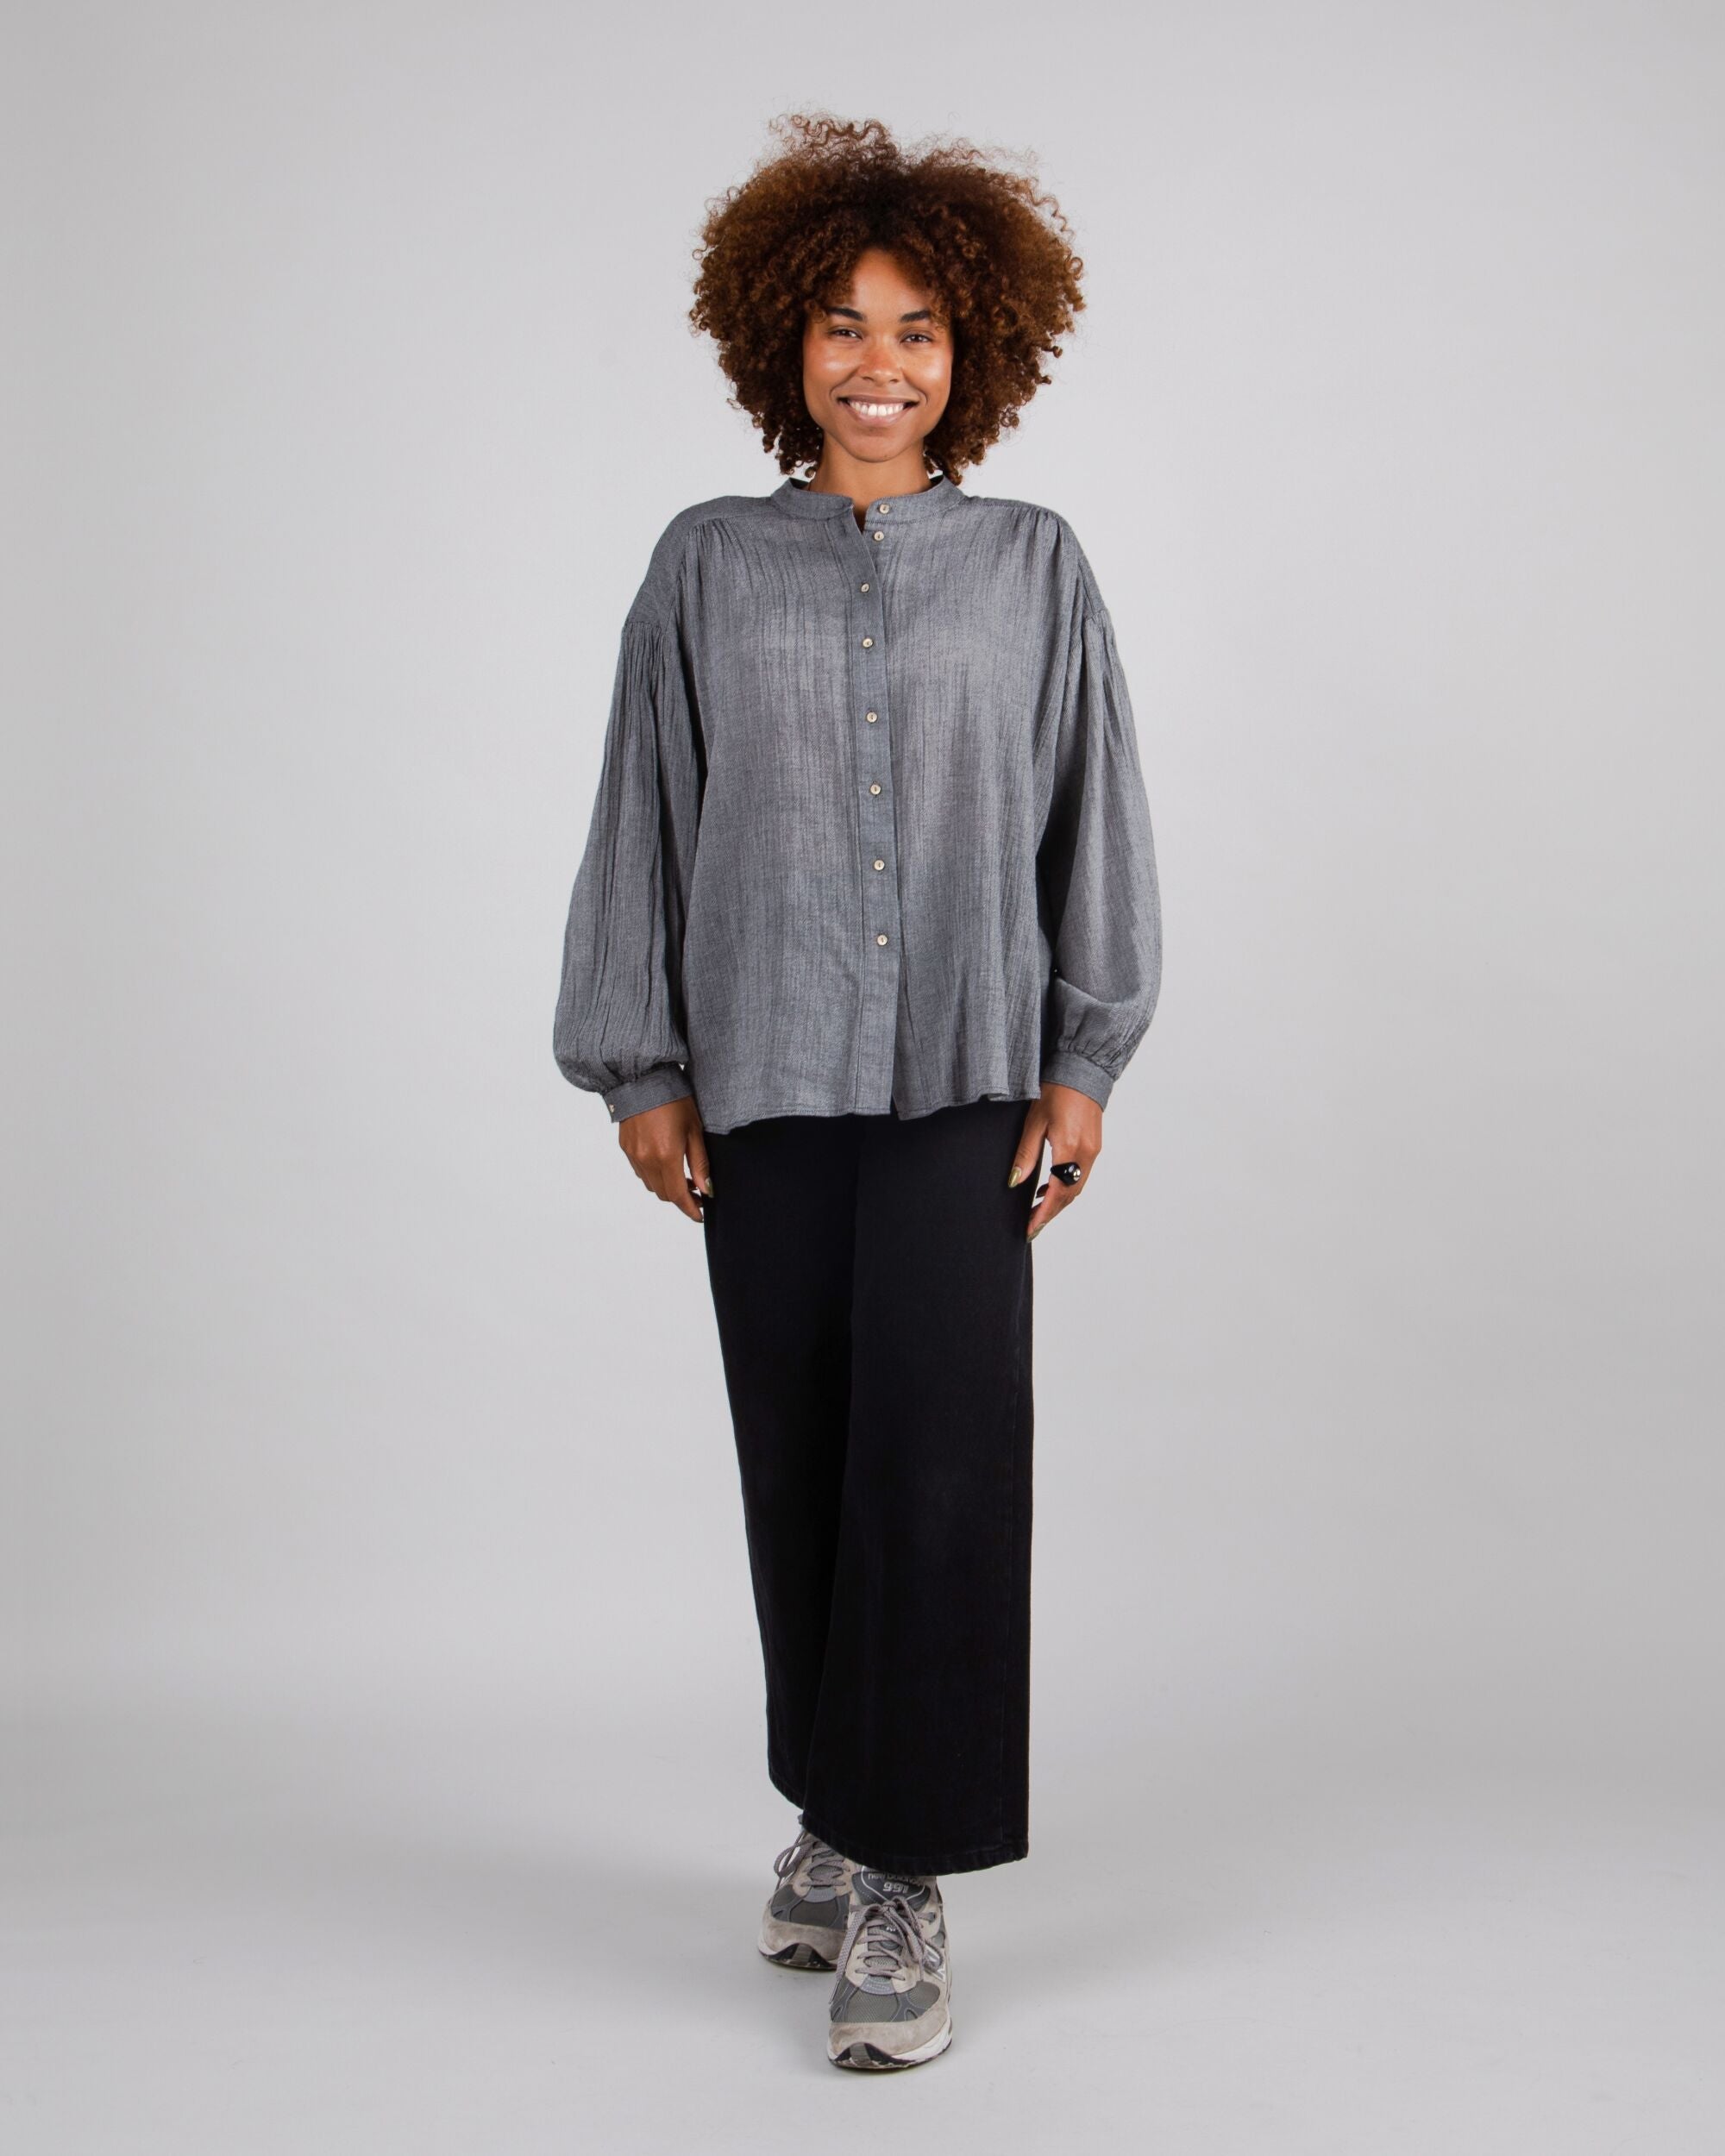 Gray Noah Boho blouse made of organic cotton from Brava Fabrics